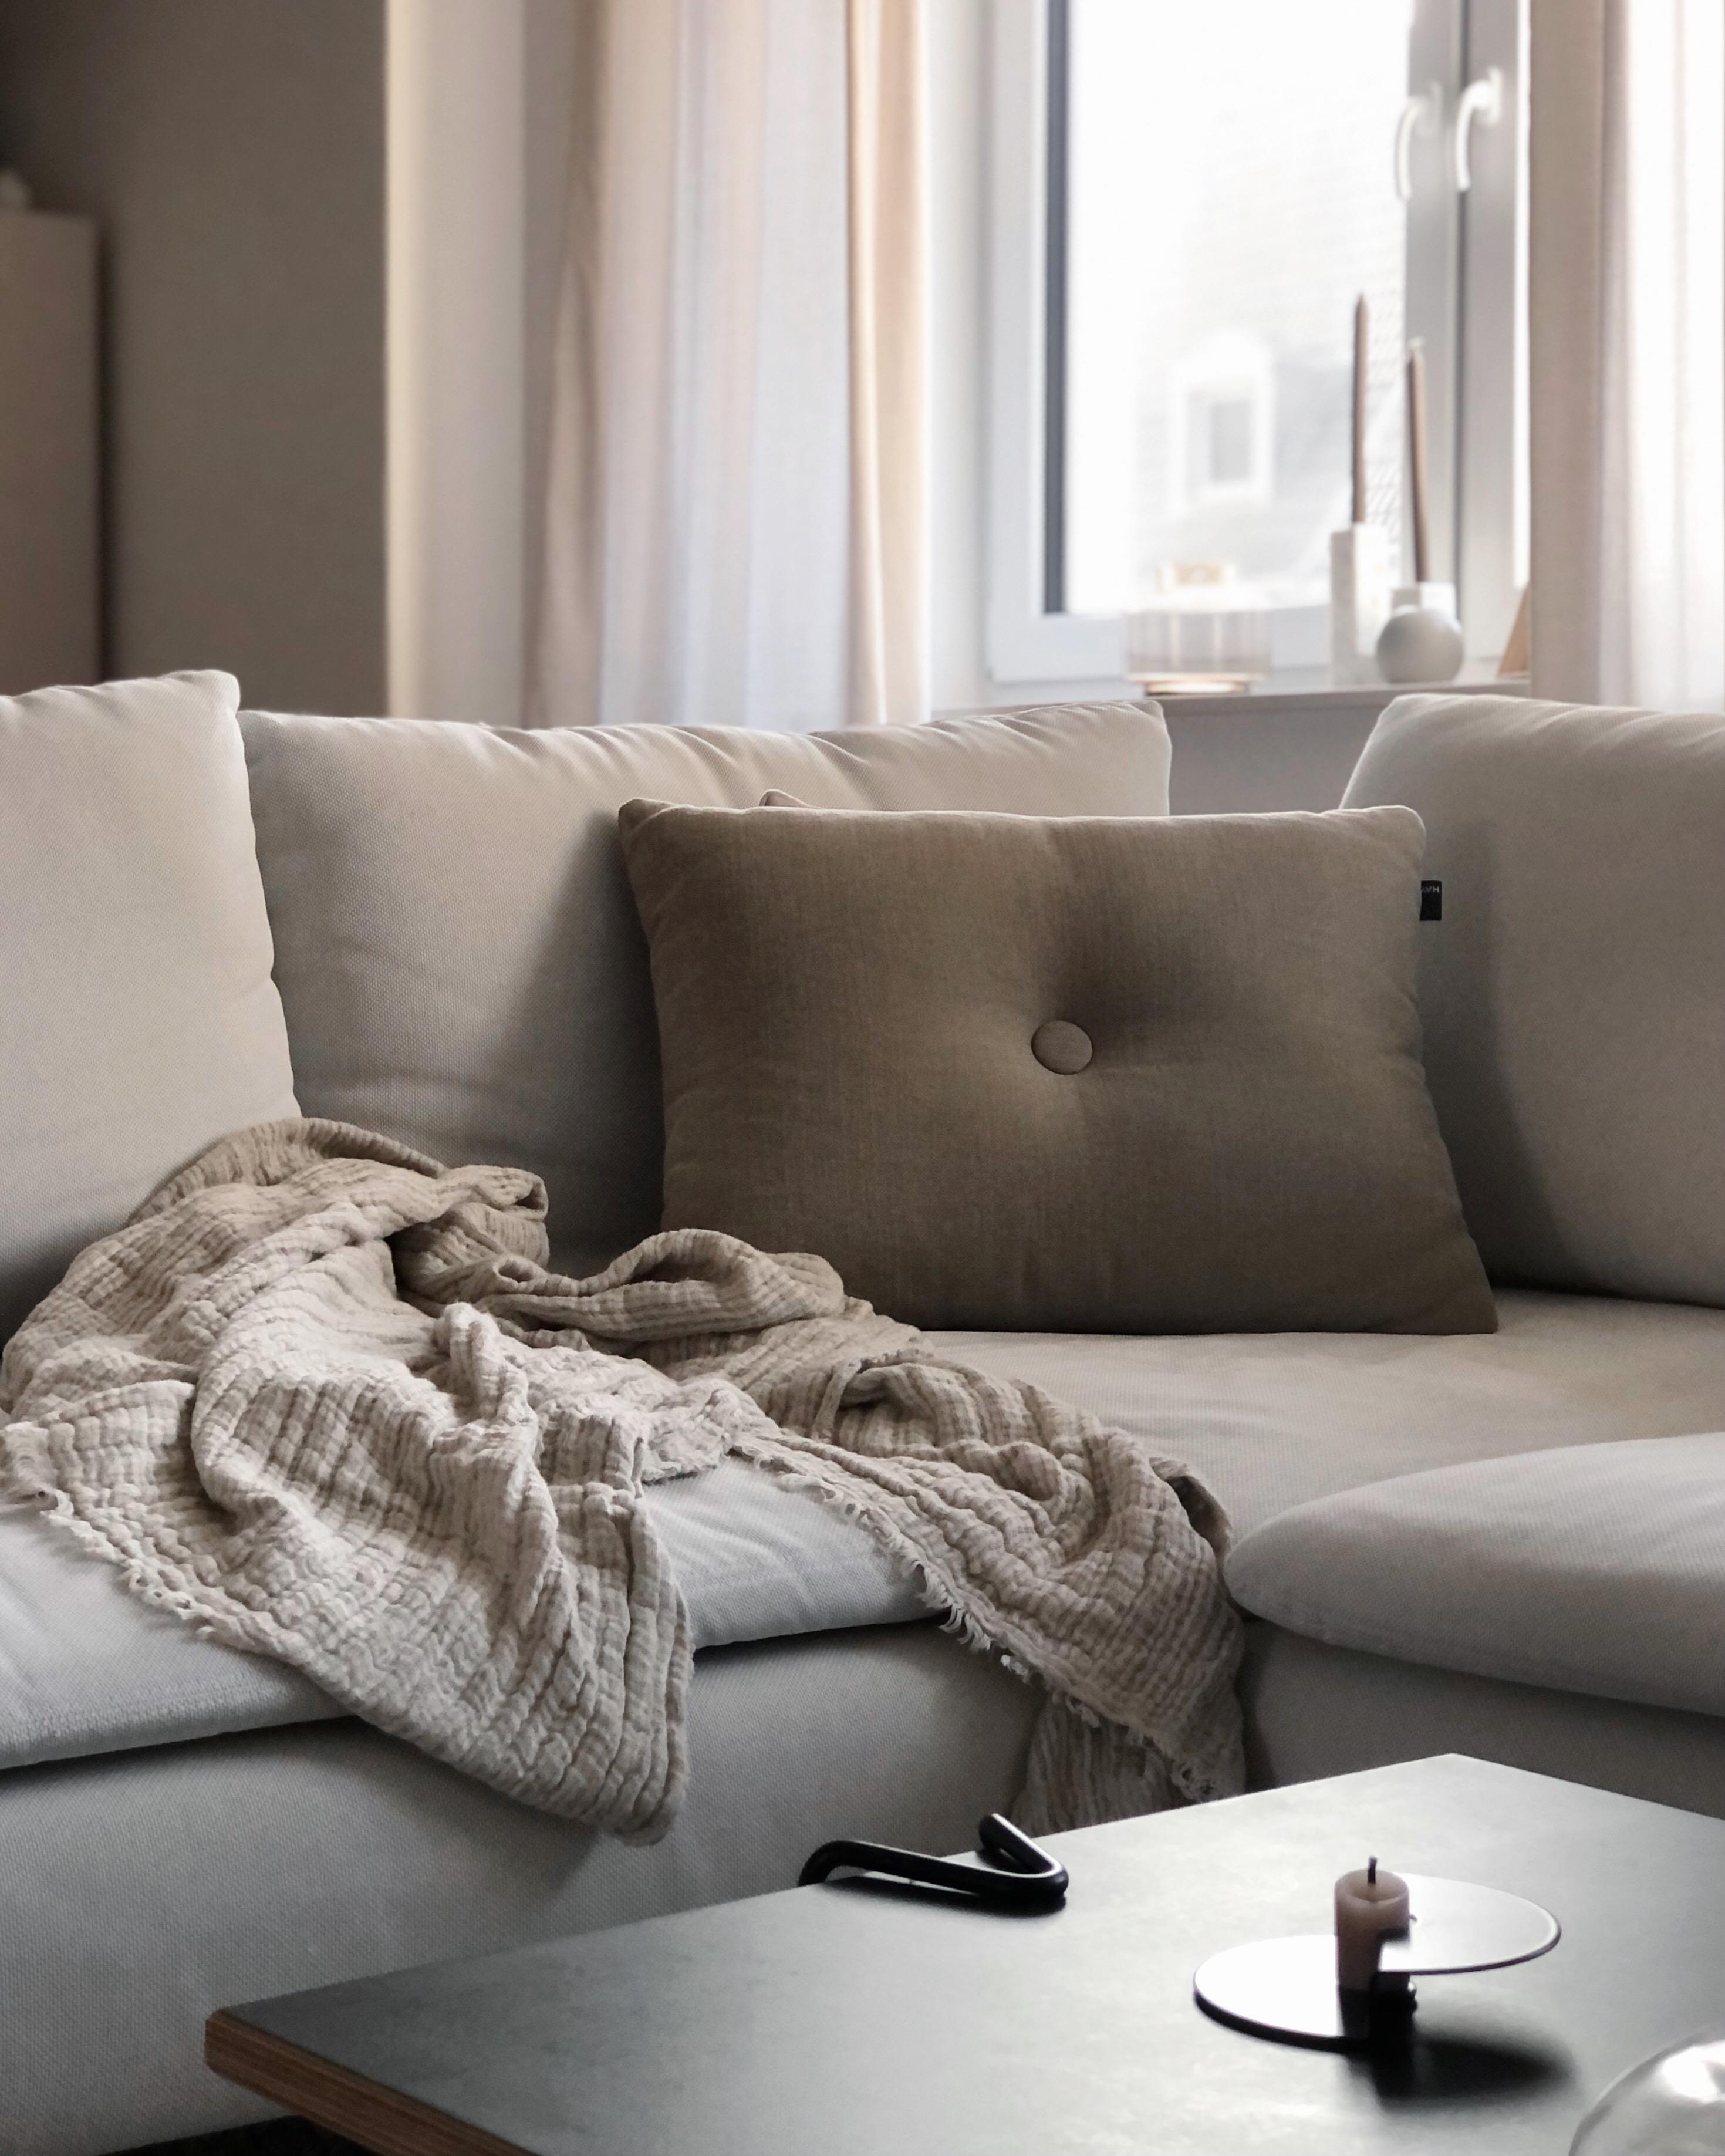 #wohnzimmer #livingroom #cozy #hygge # home #sofa #couch #couchstyle #nordicliving #skandinavisch #skandi #interior